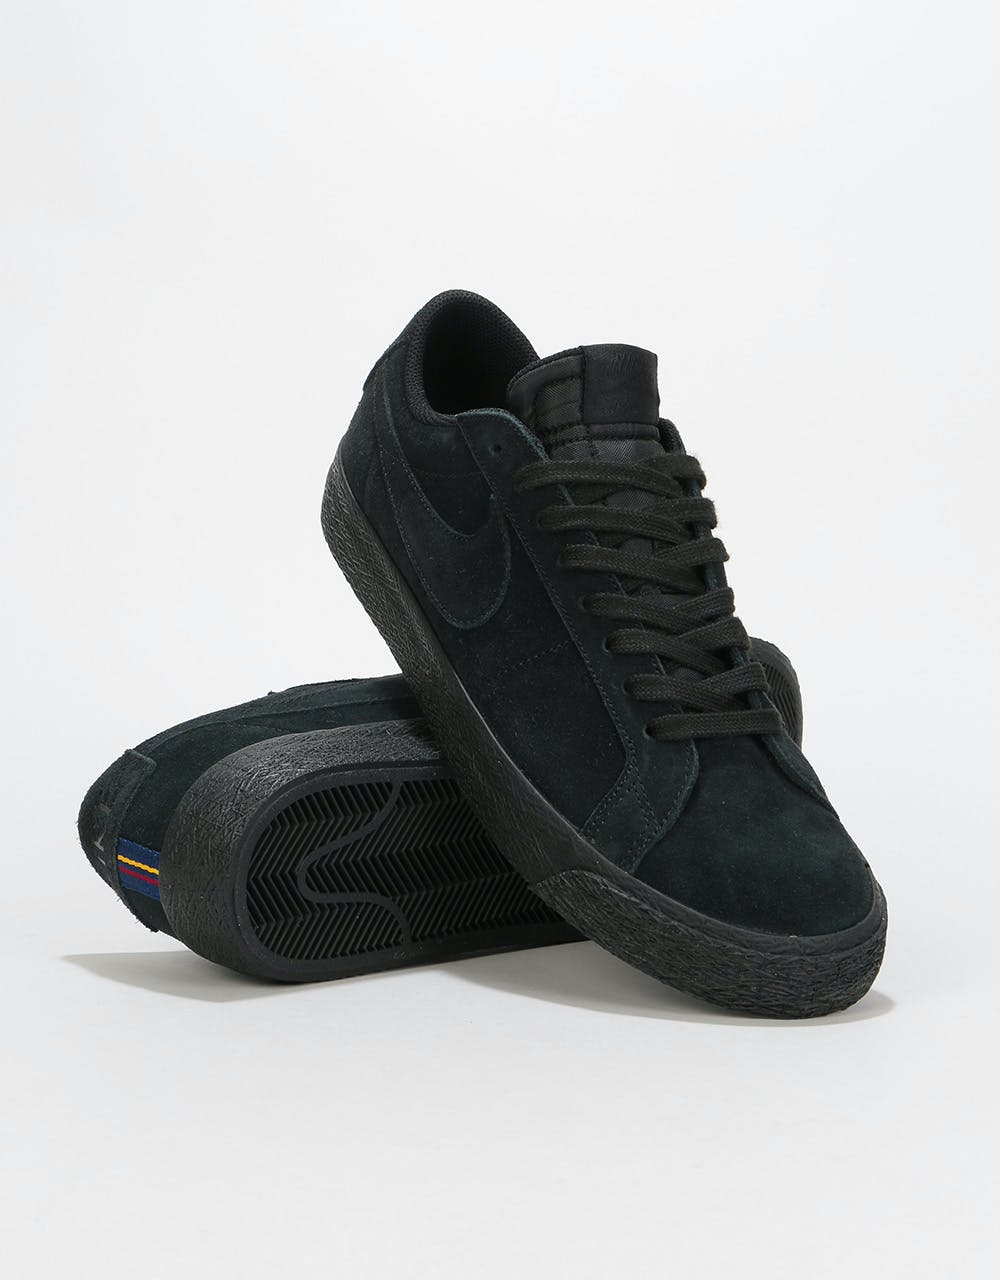 Nike SB Zoom Blazer Low Skate Shoes - Black/Black-Gunsmoke